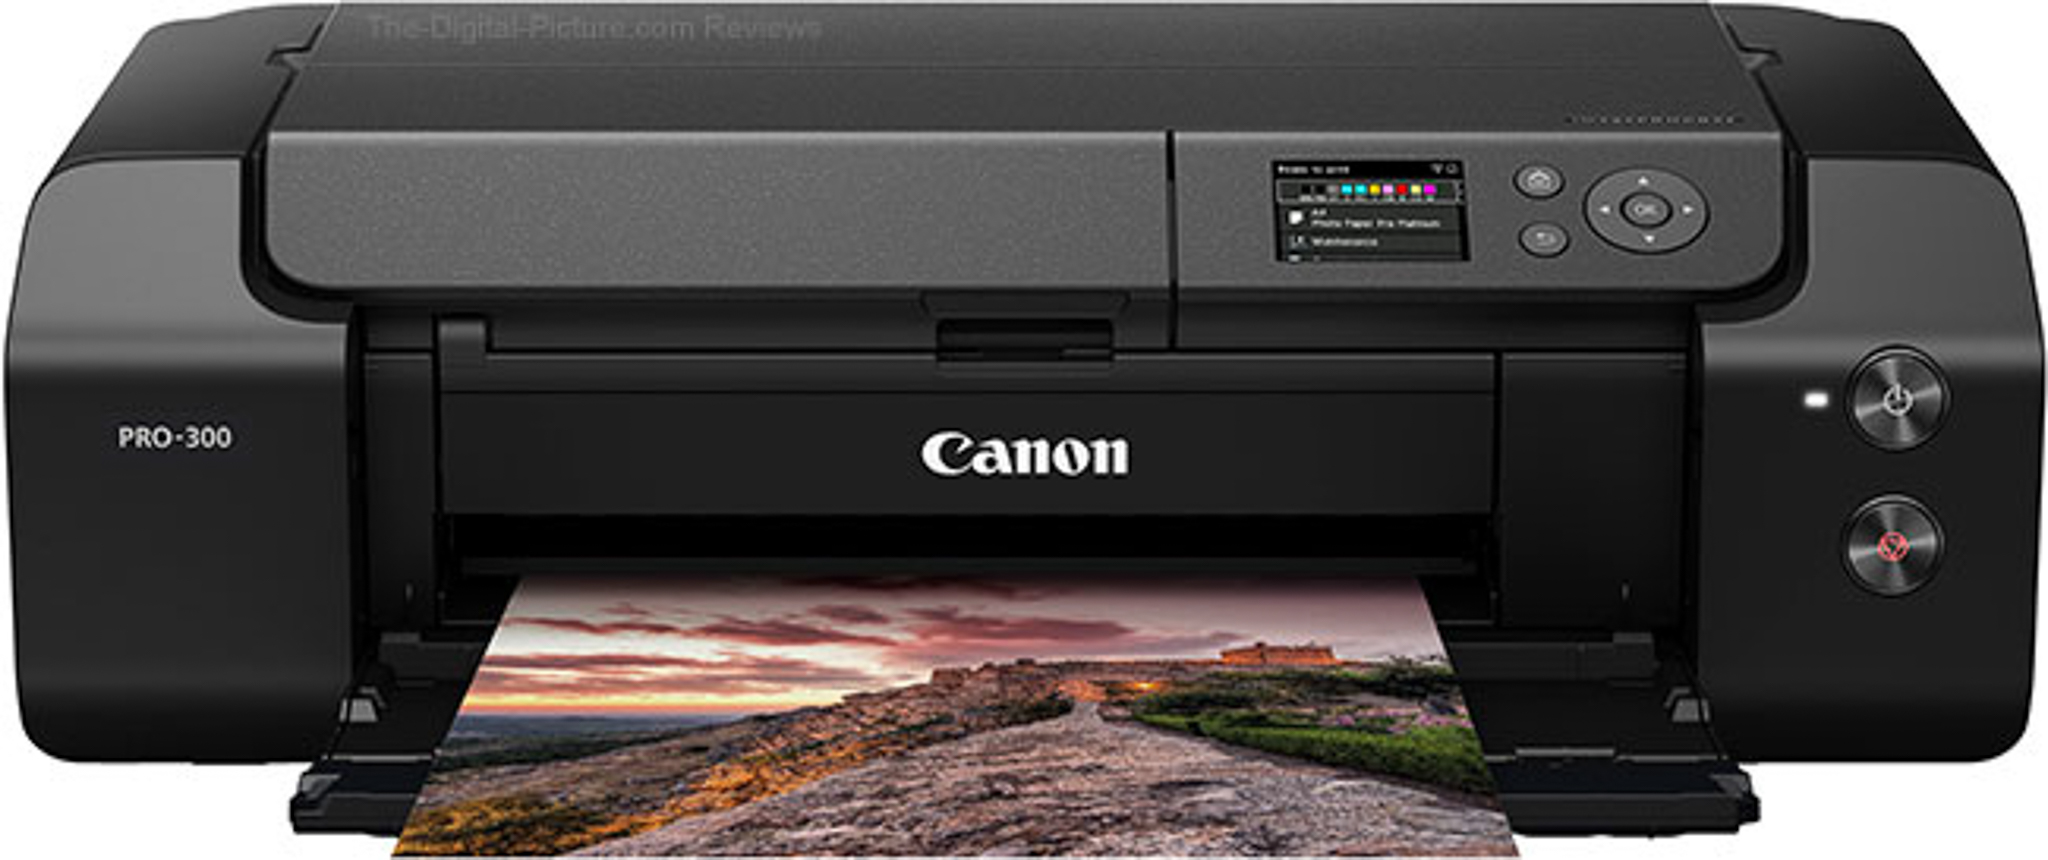 Canon-ImagePROGRAF-PRO-300-Printer.jpg